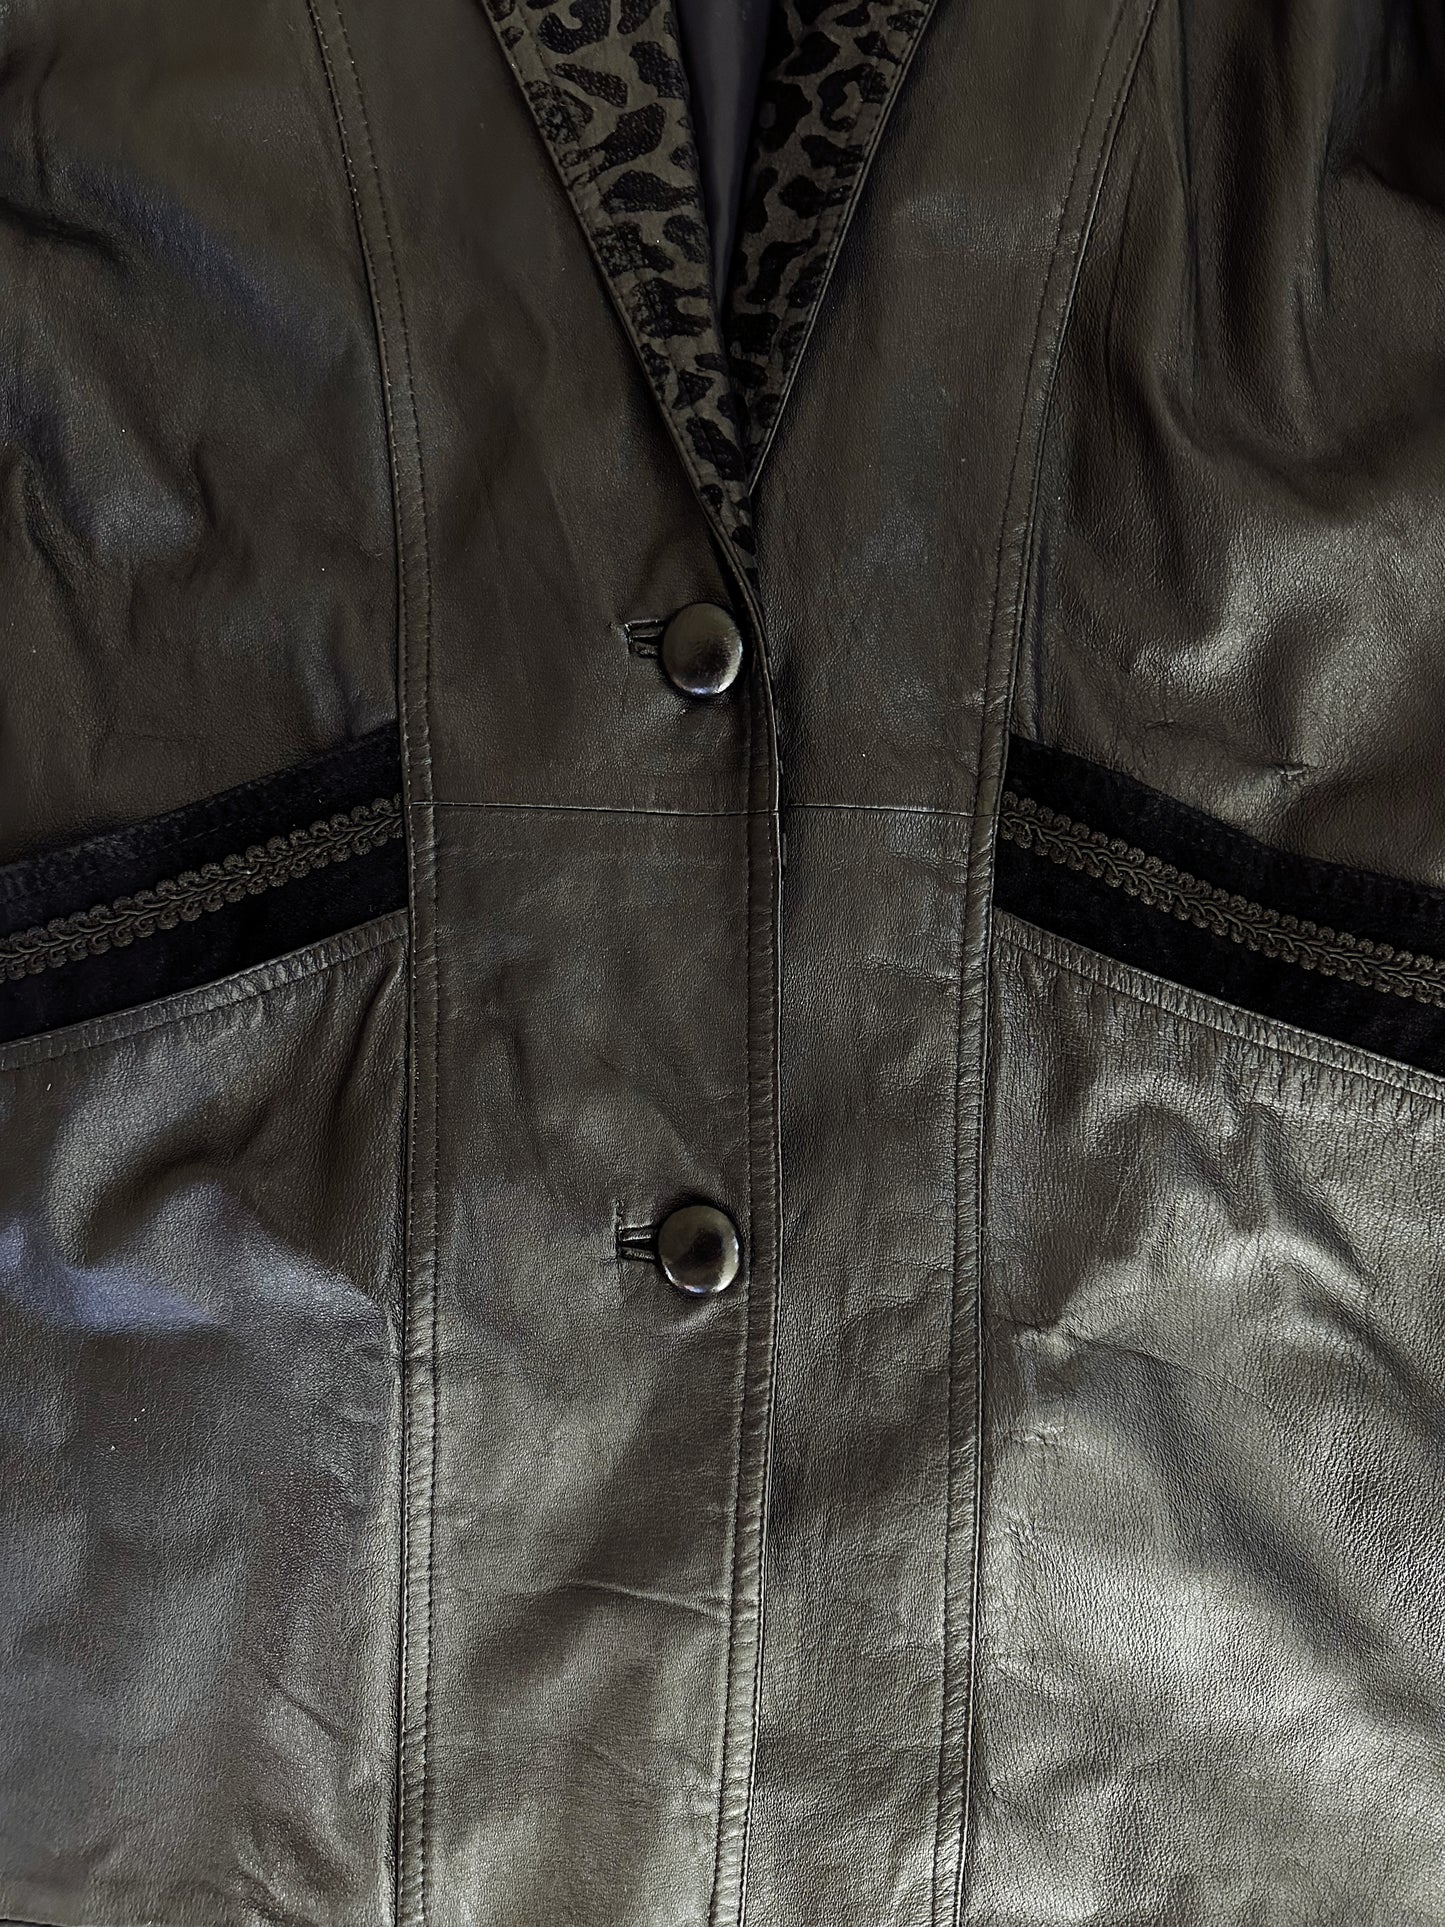 Atlantic Beach Leather Coat Works Jacket